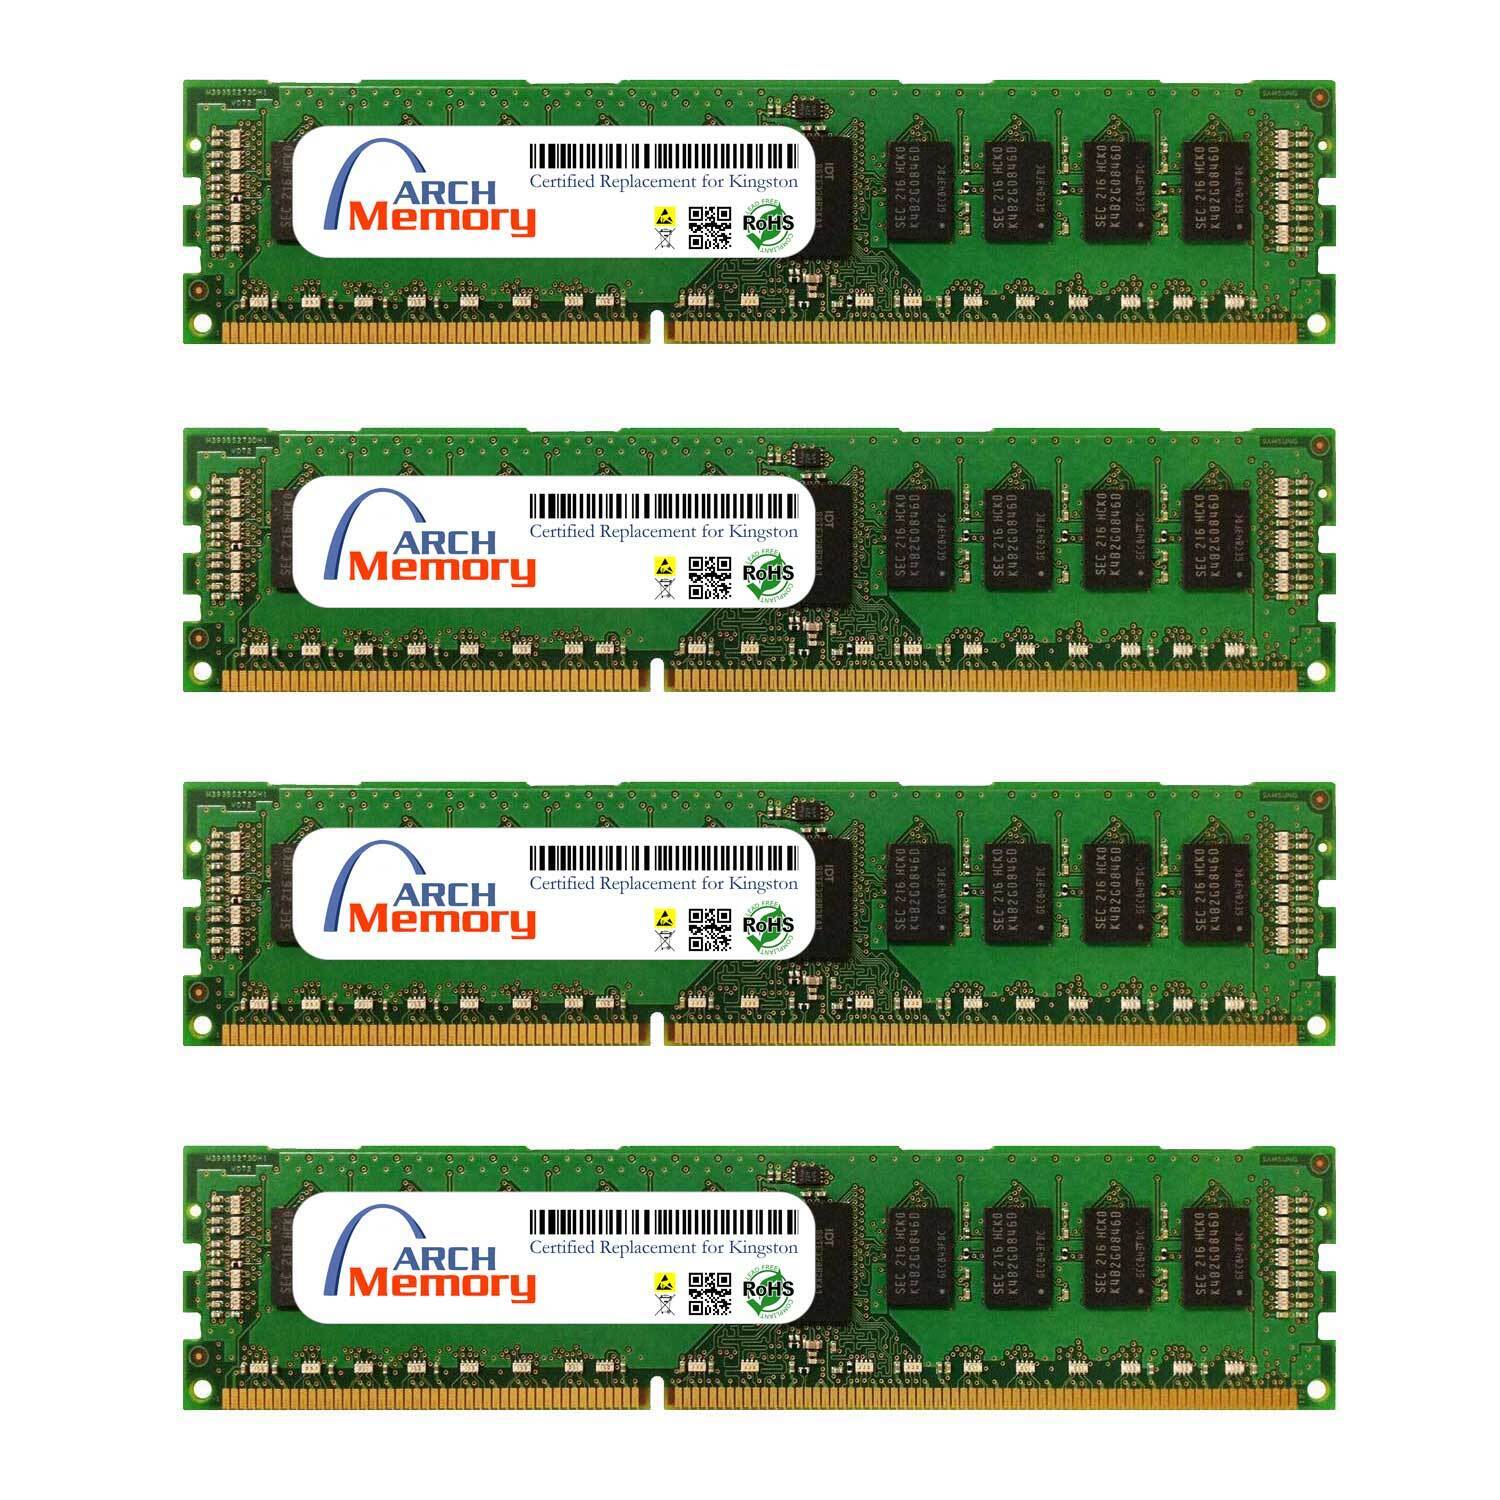 Arch Memory KTD-PE316EK4/32G 8GB Replacement for Kingston DDR3 UDIMM RAM